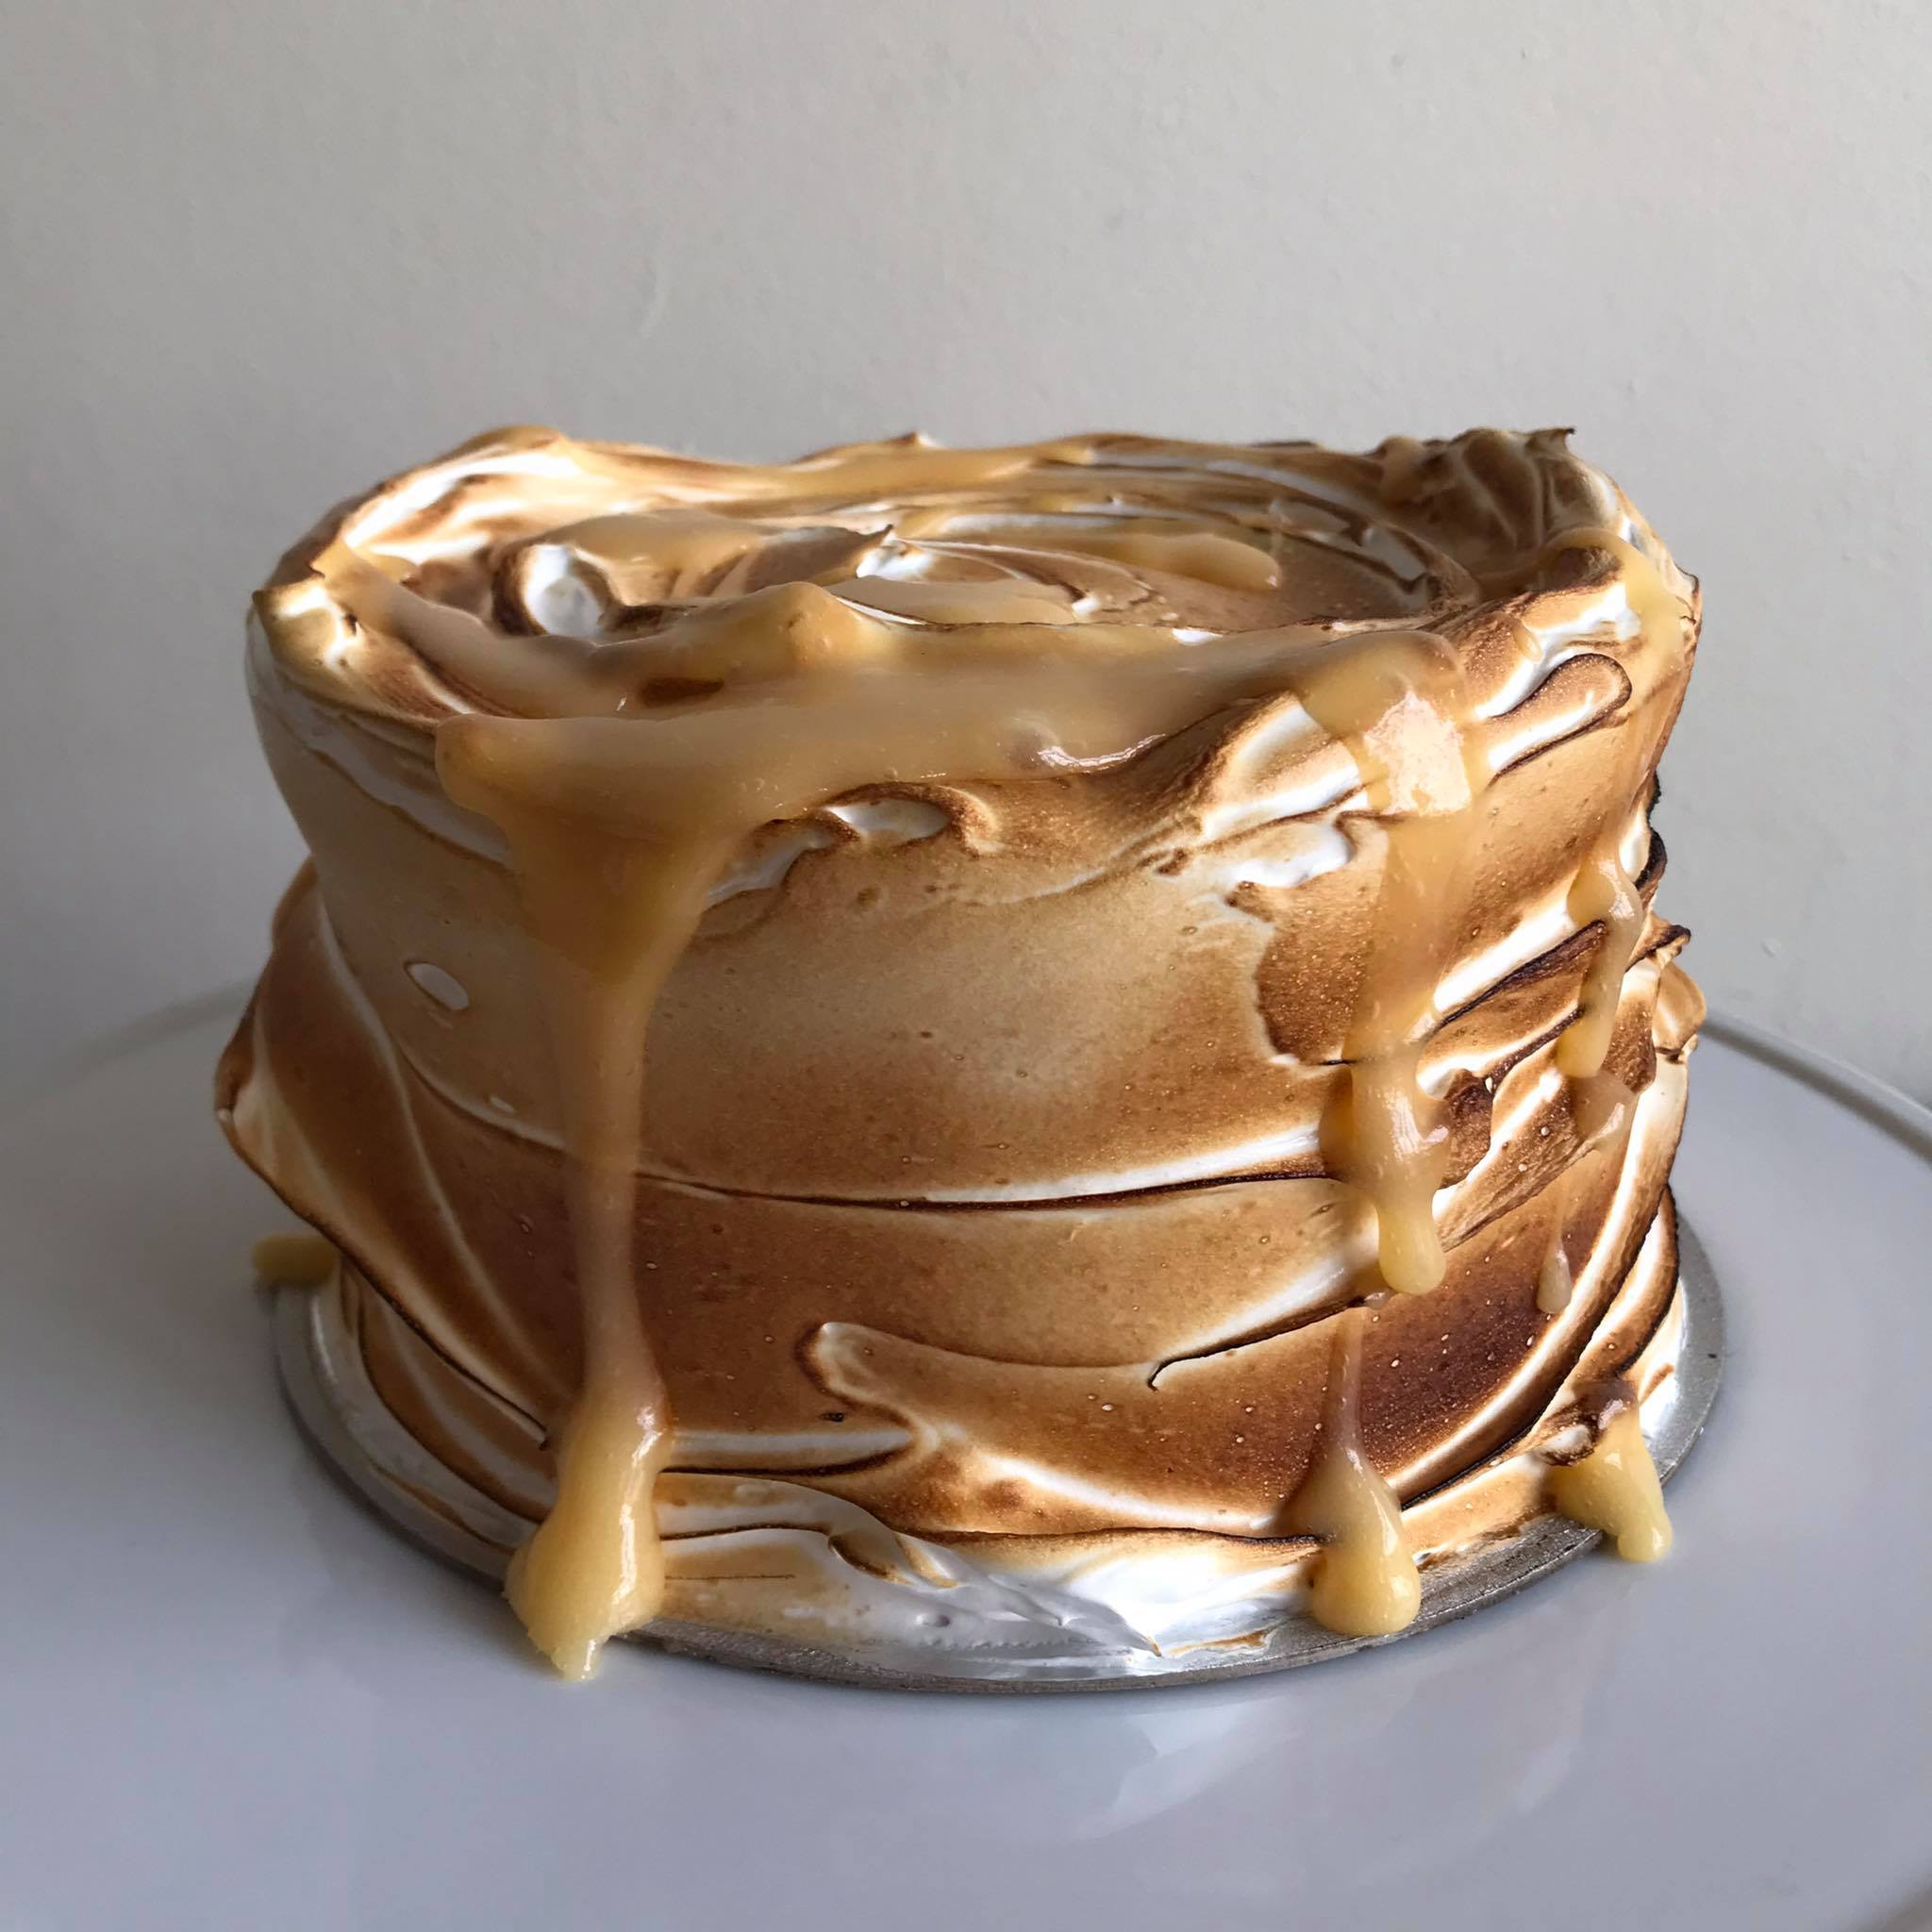 Torched Italian Meringue – Classic Cake